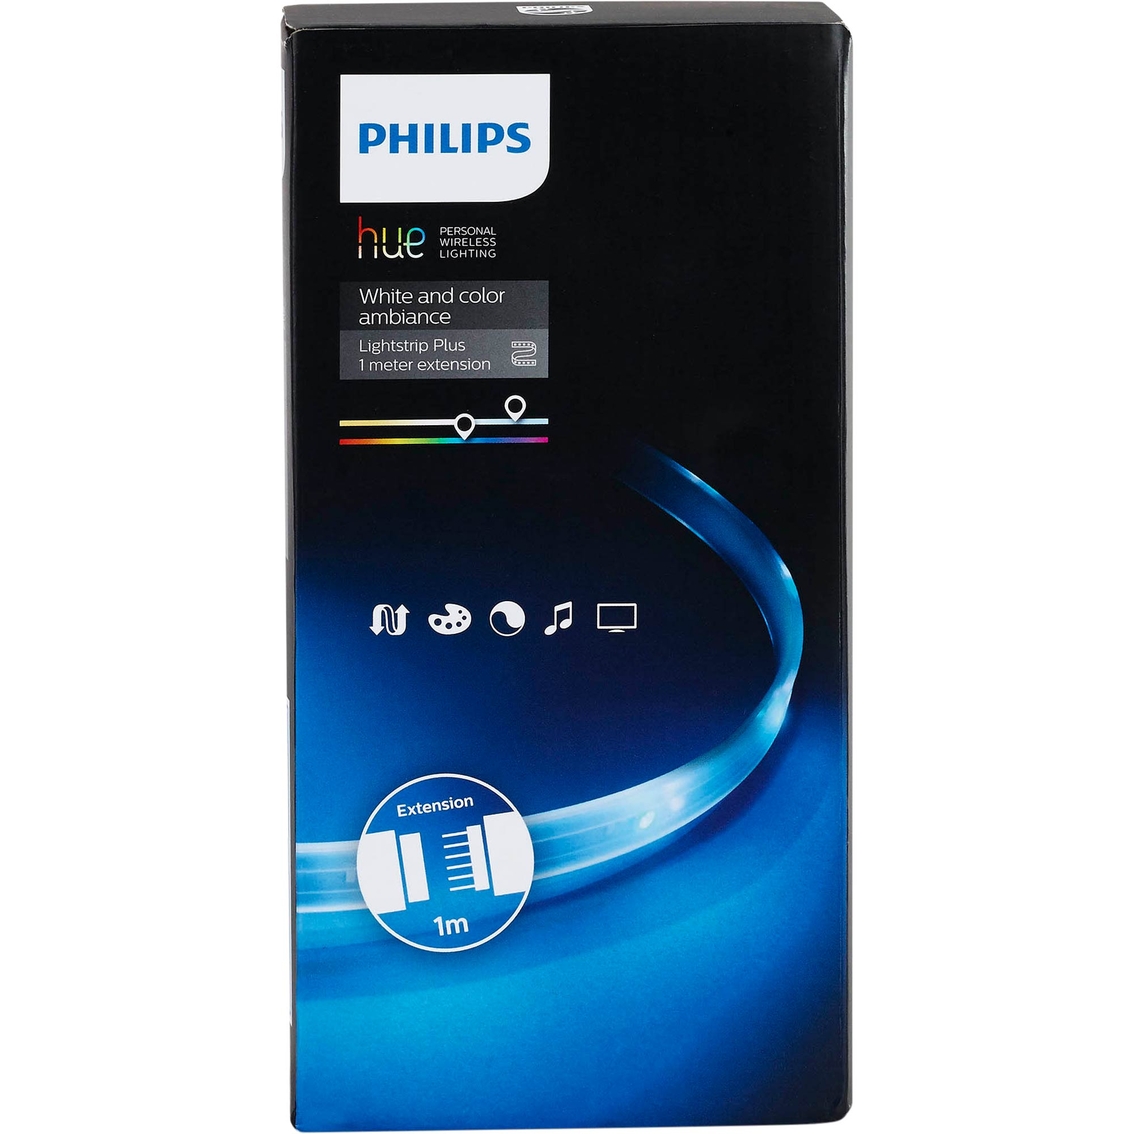 Philips Hue Color Lightstrip Plus V4 1m - Image 2 of 2